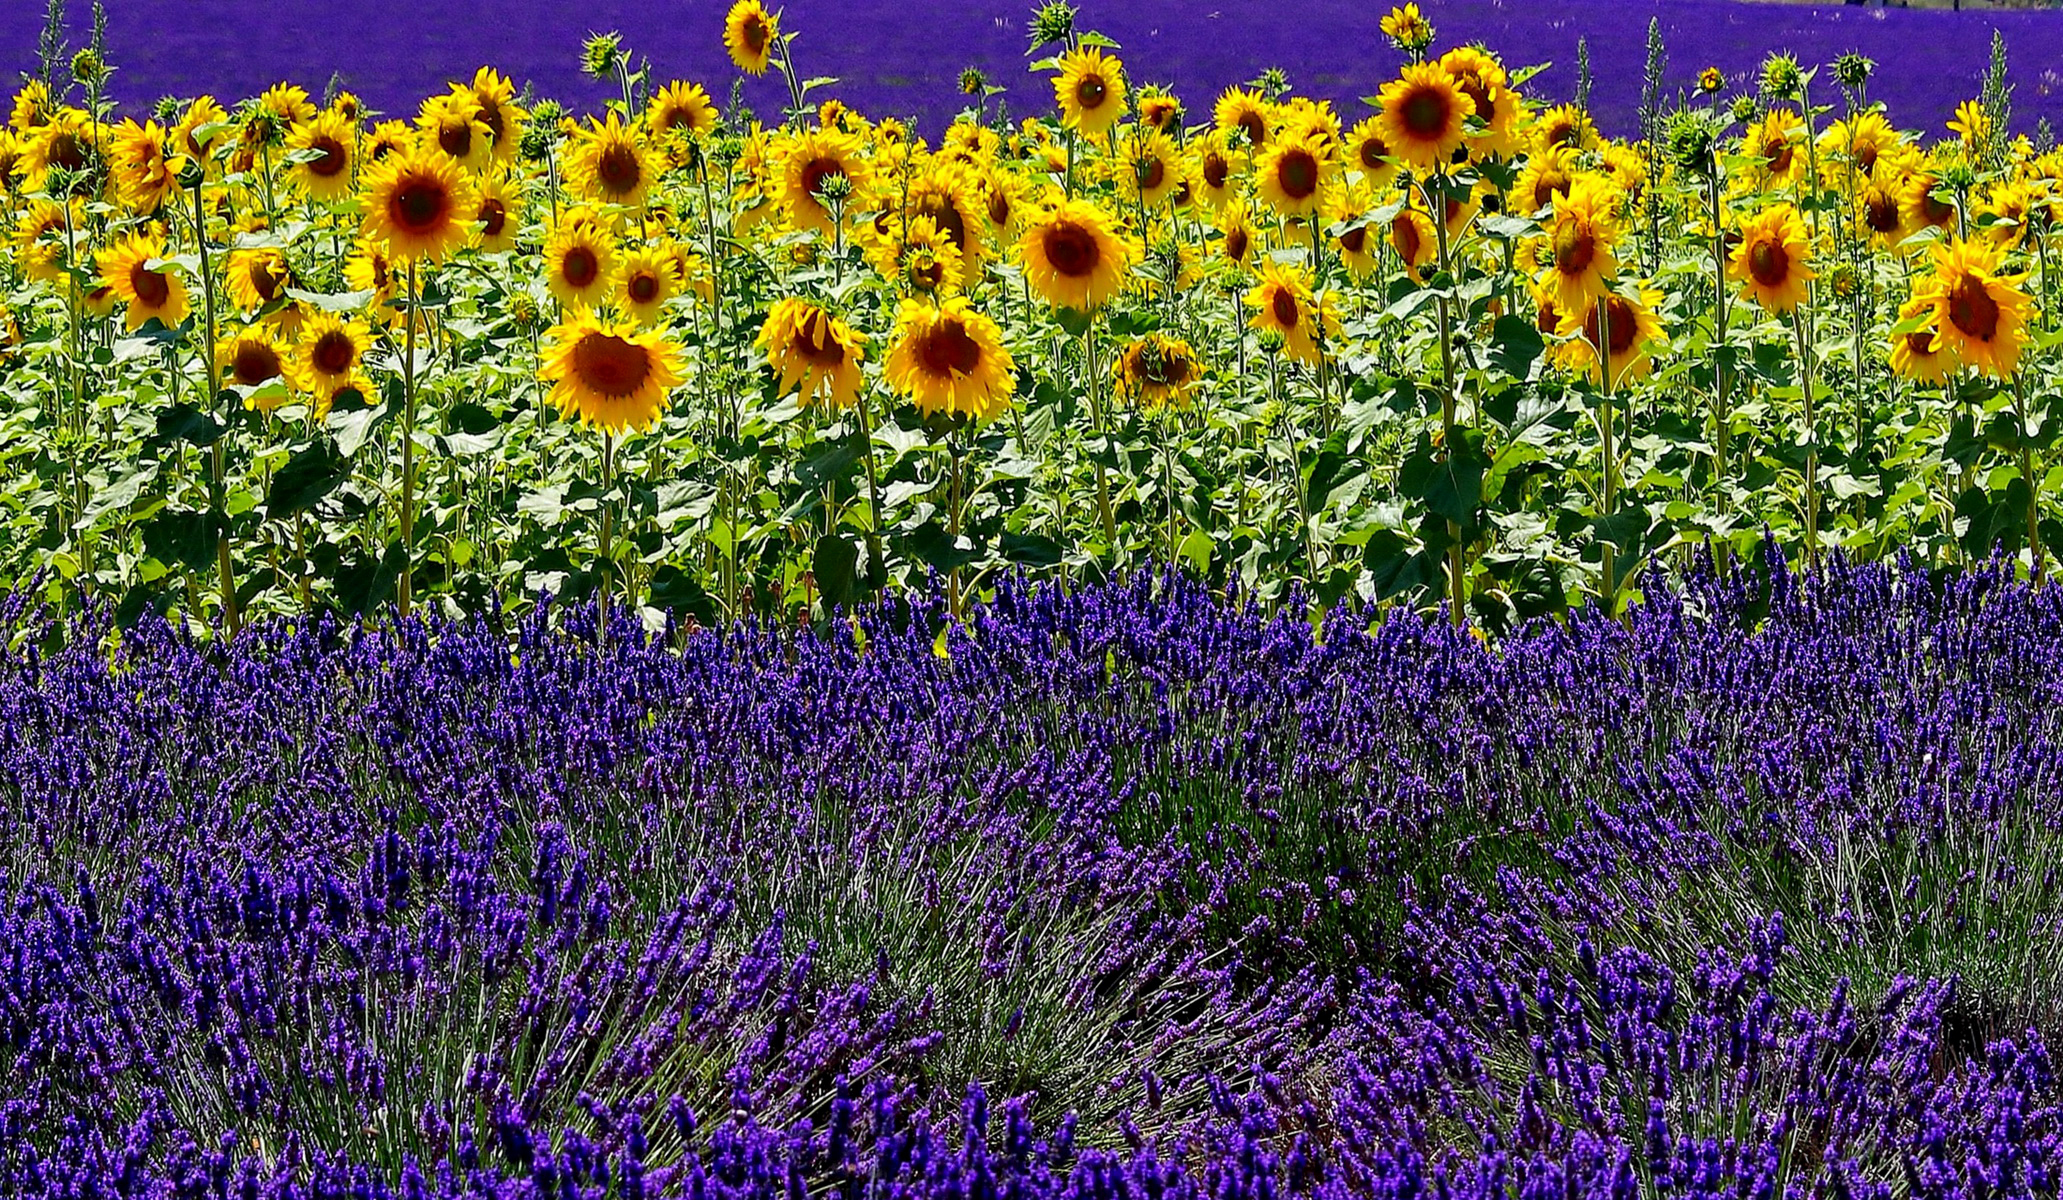 Handy-Wallpaper Natur, Blumen, Sommer, Blume, Feld, Sonnenblume, Lavendel, Erde/natur kostenlos herunterladen.